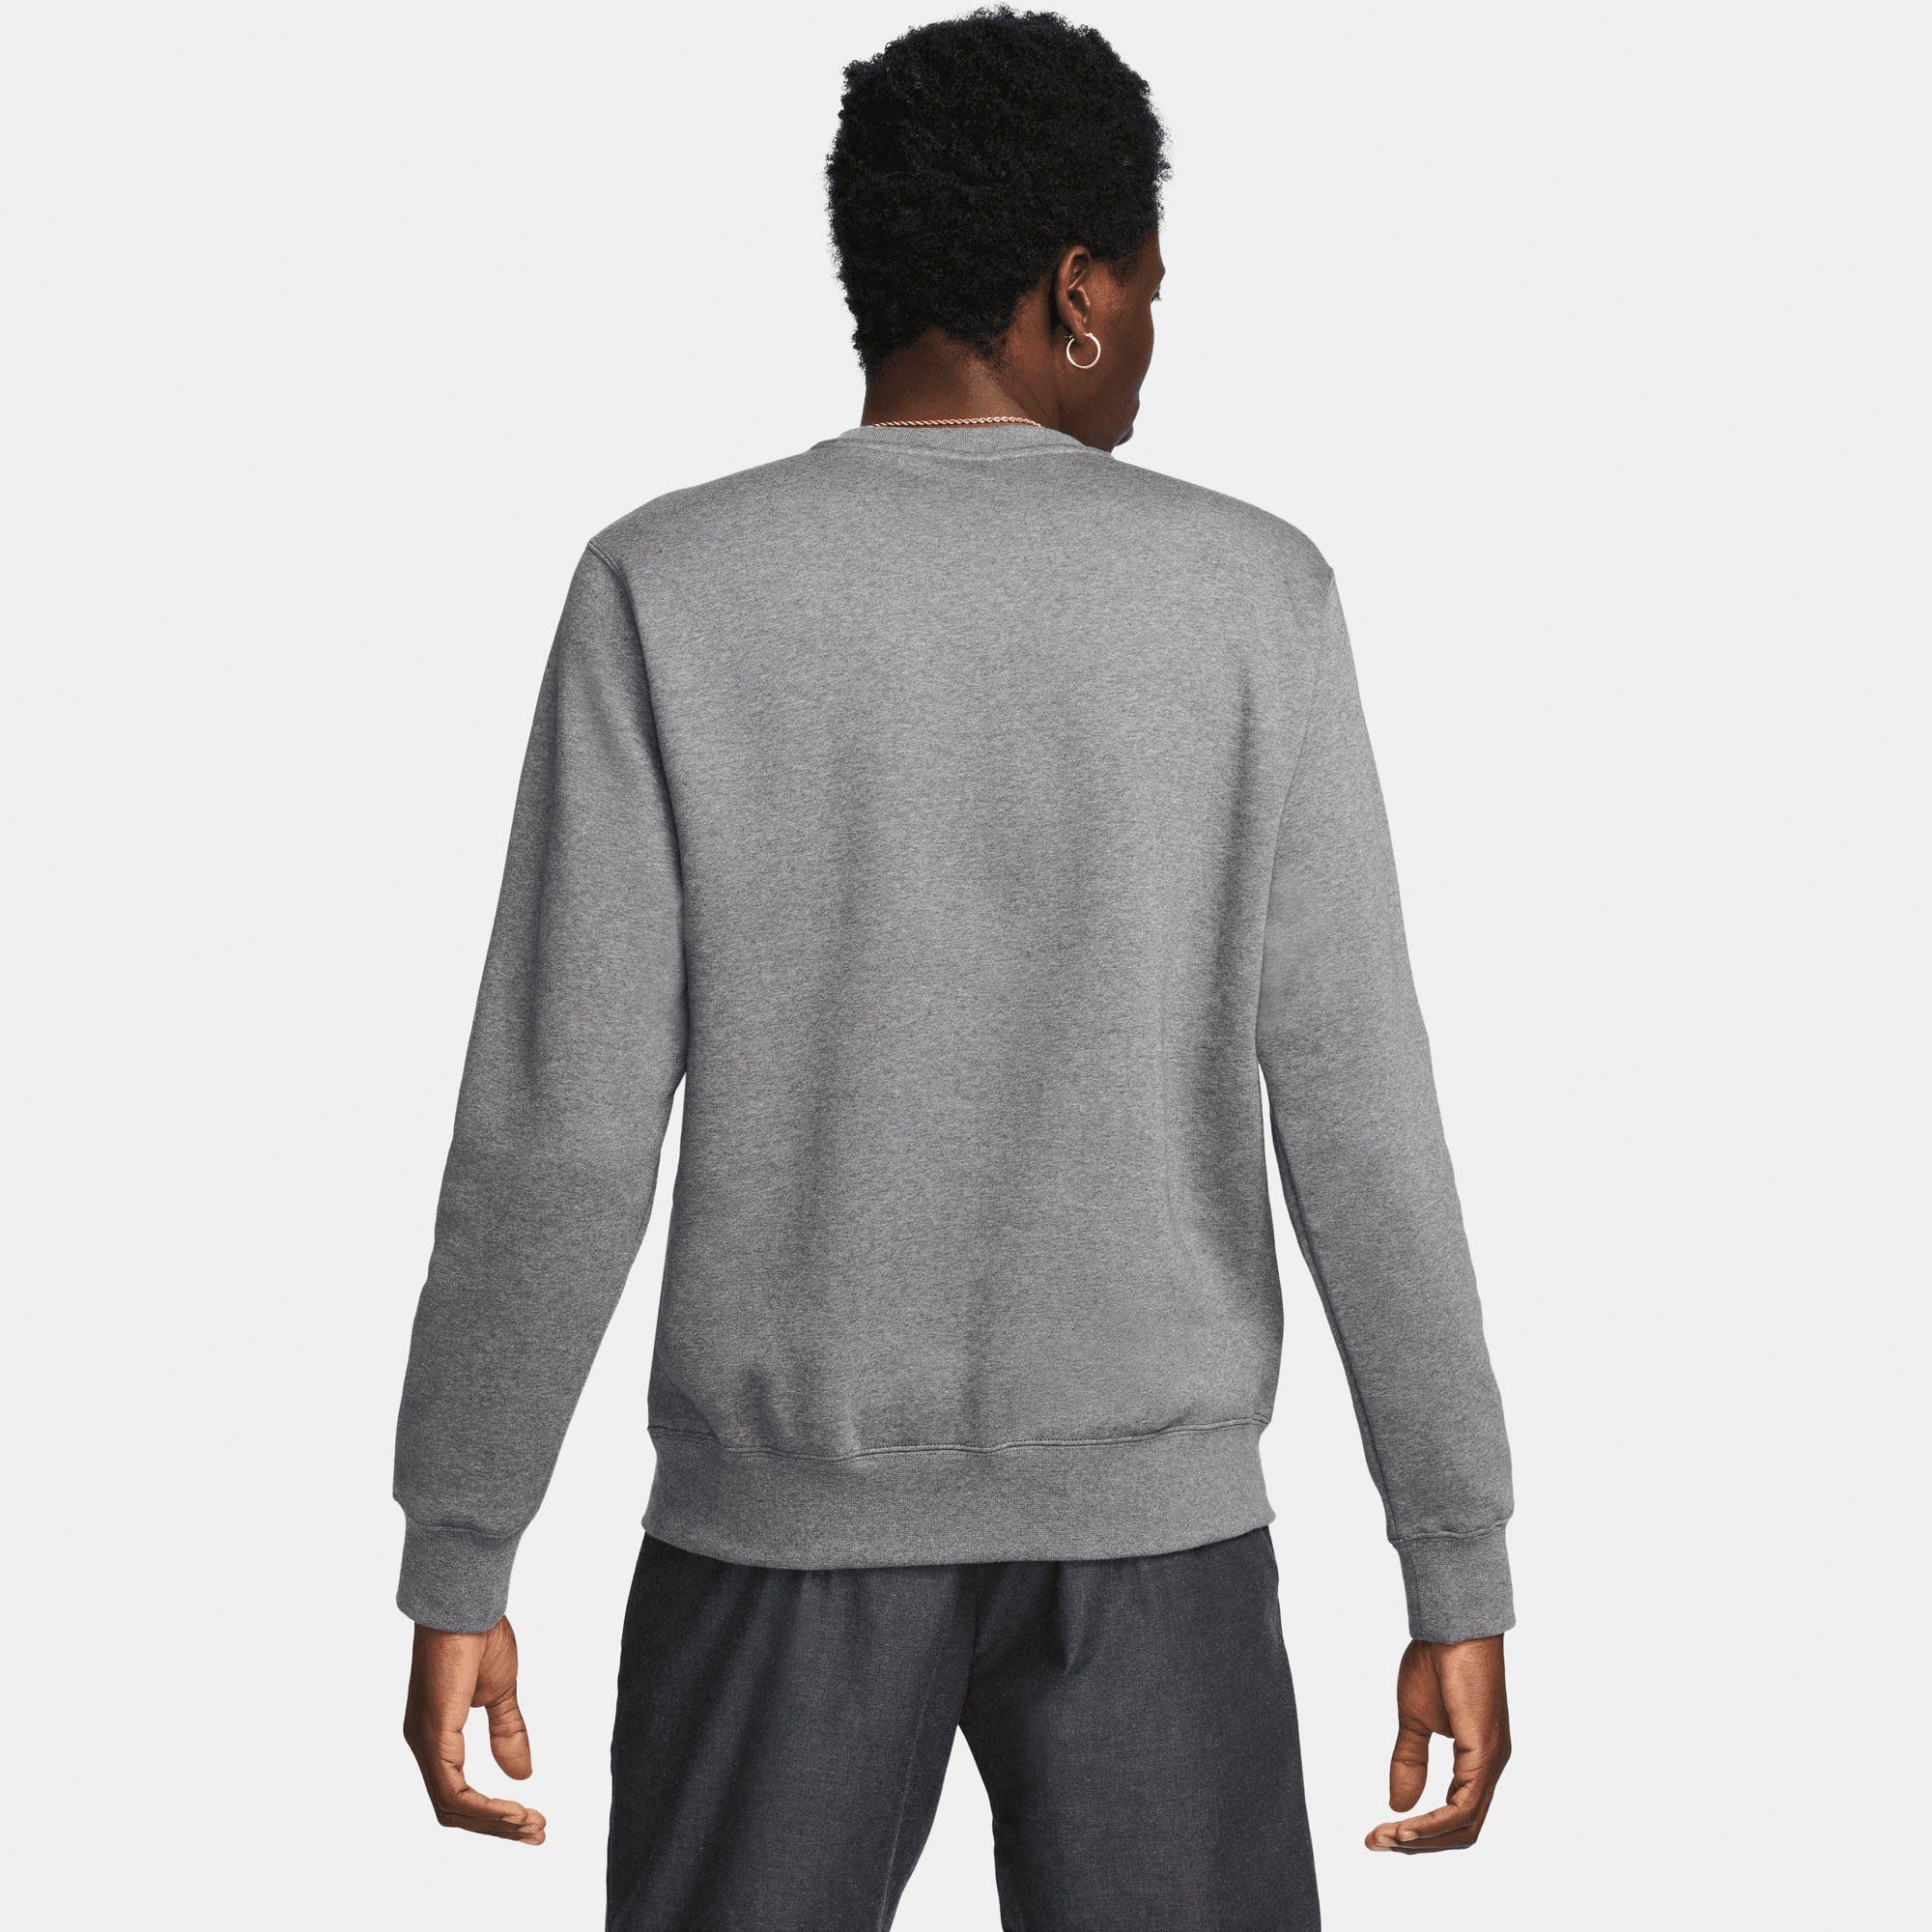 Sweatshirt Men's Sportswear Club Fleece Crew CHARCOAL Graphic HEATHR Nike